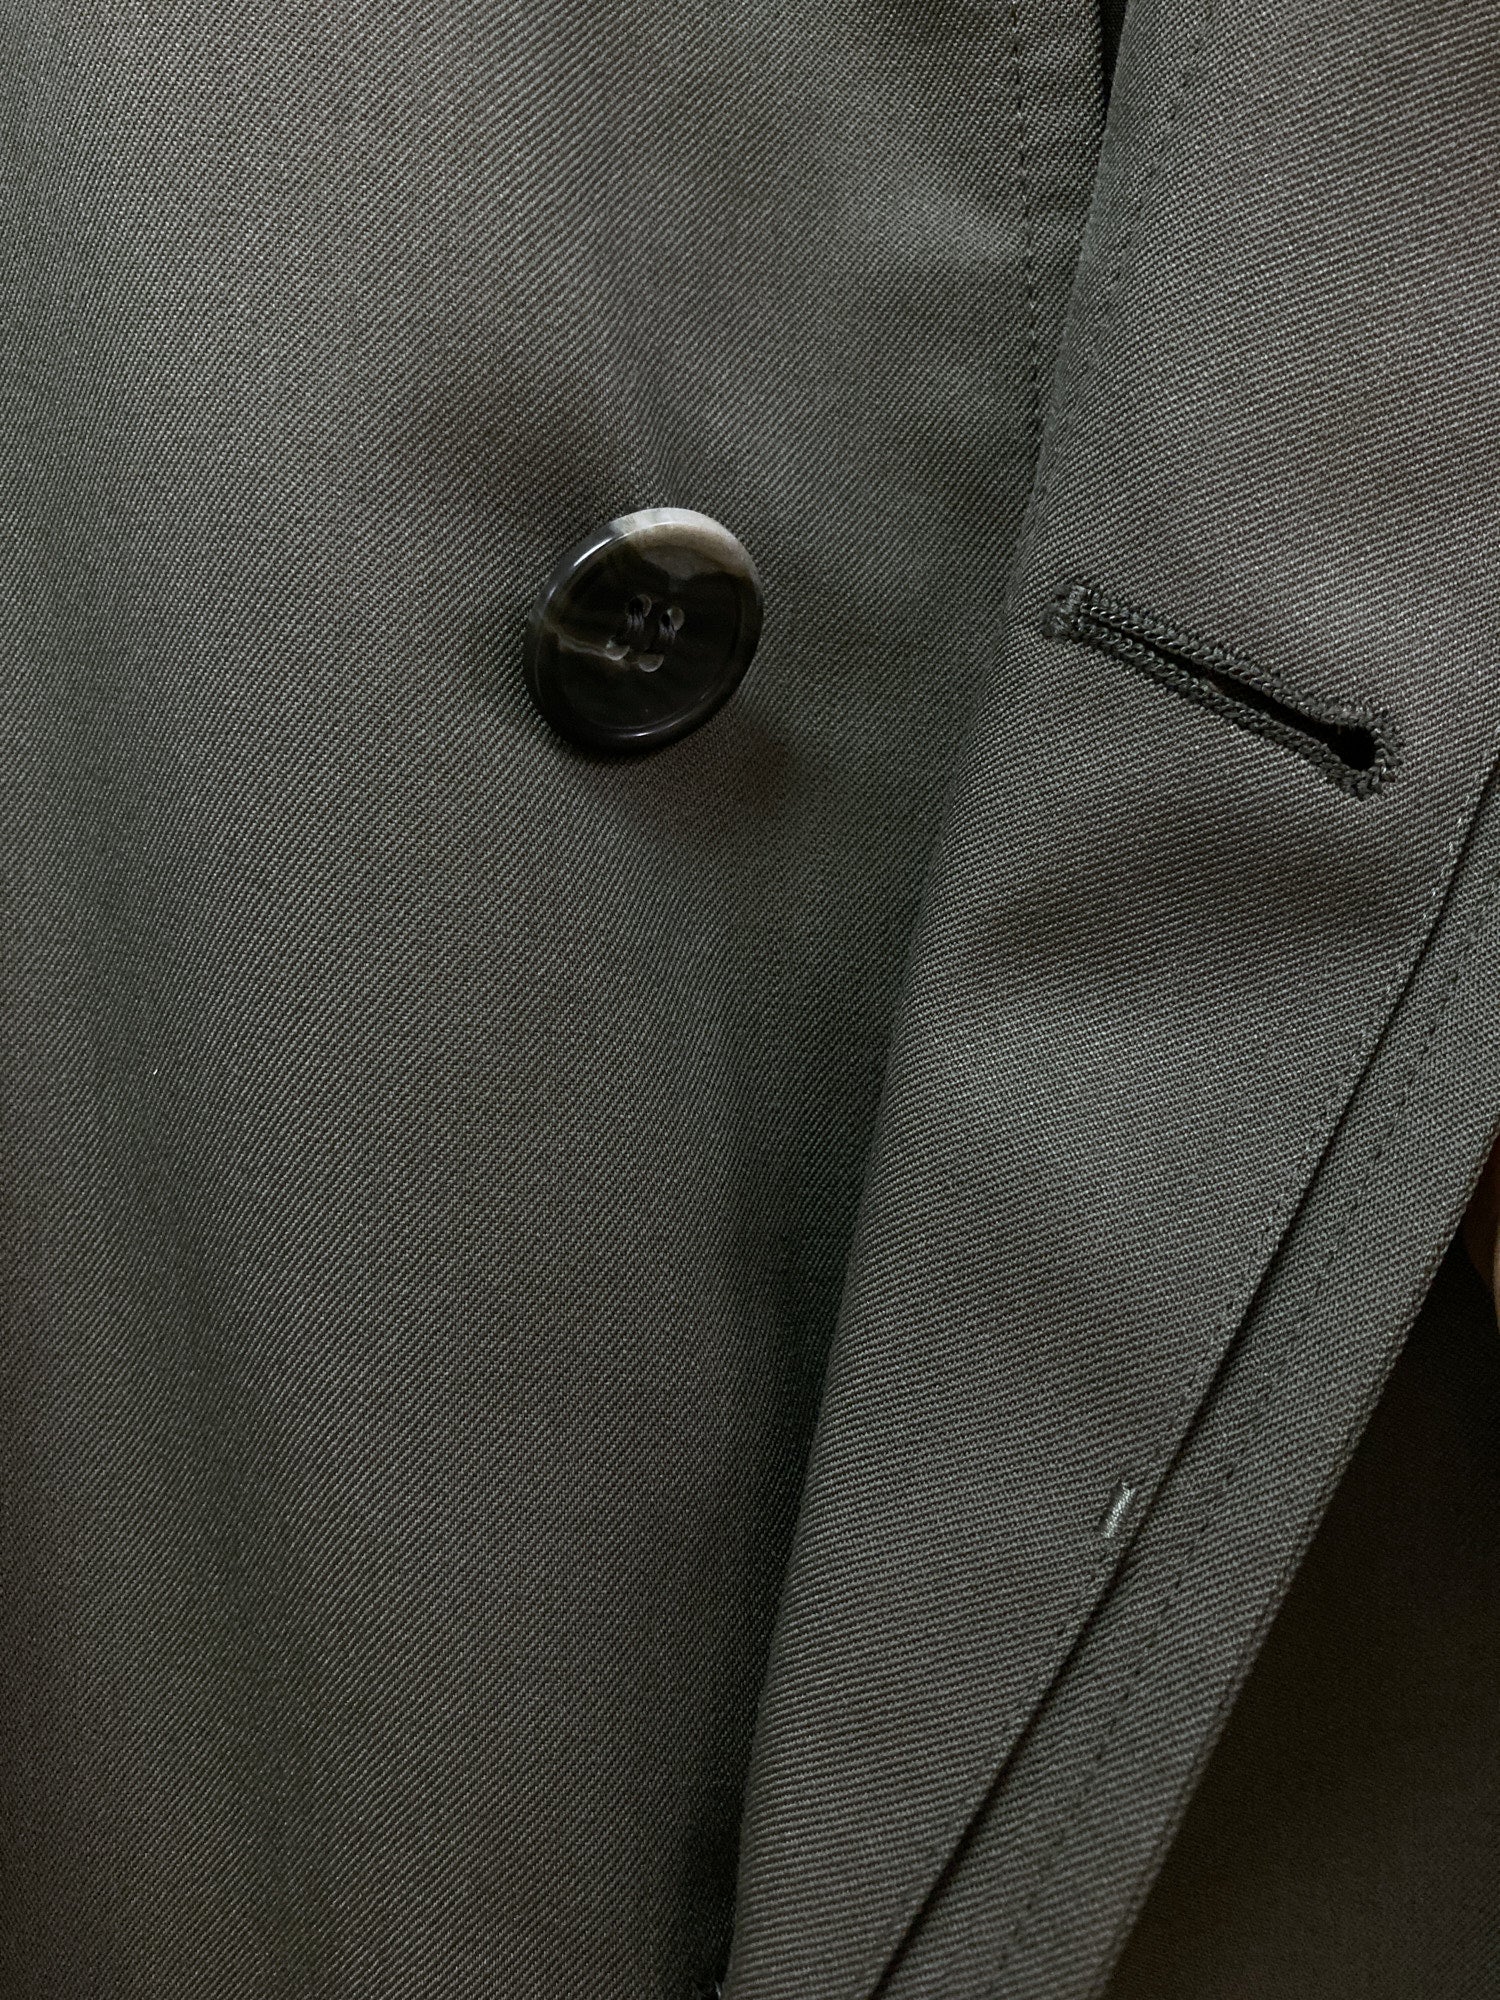 D'URBAN khaki grey wool silk covered placket mackintosh coat - S M L